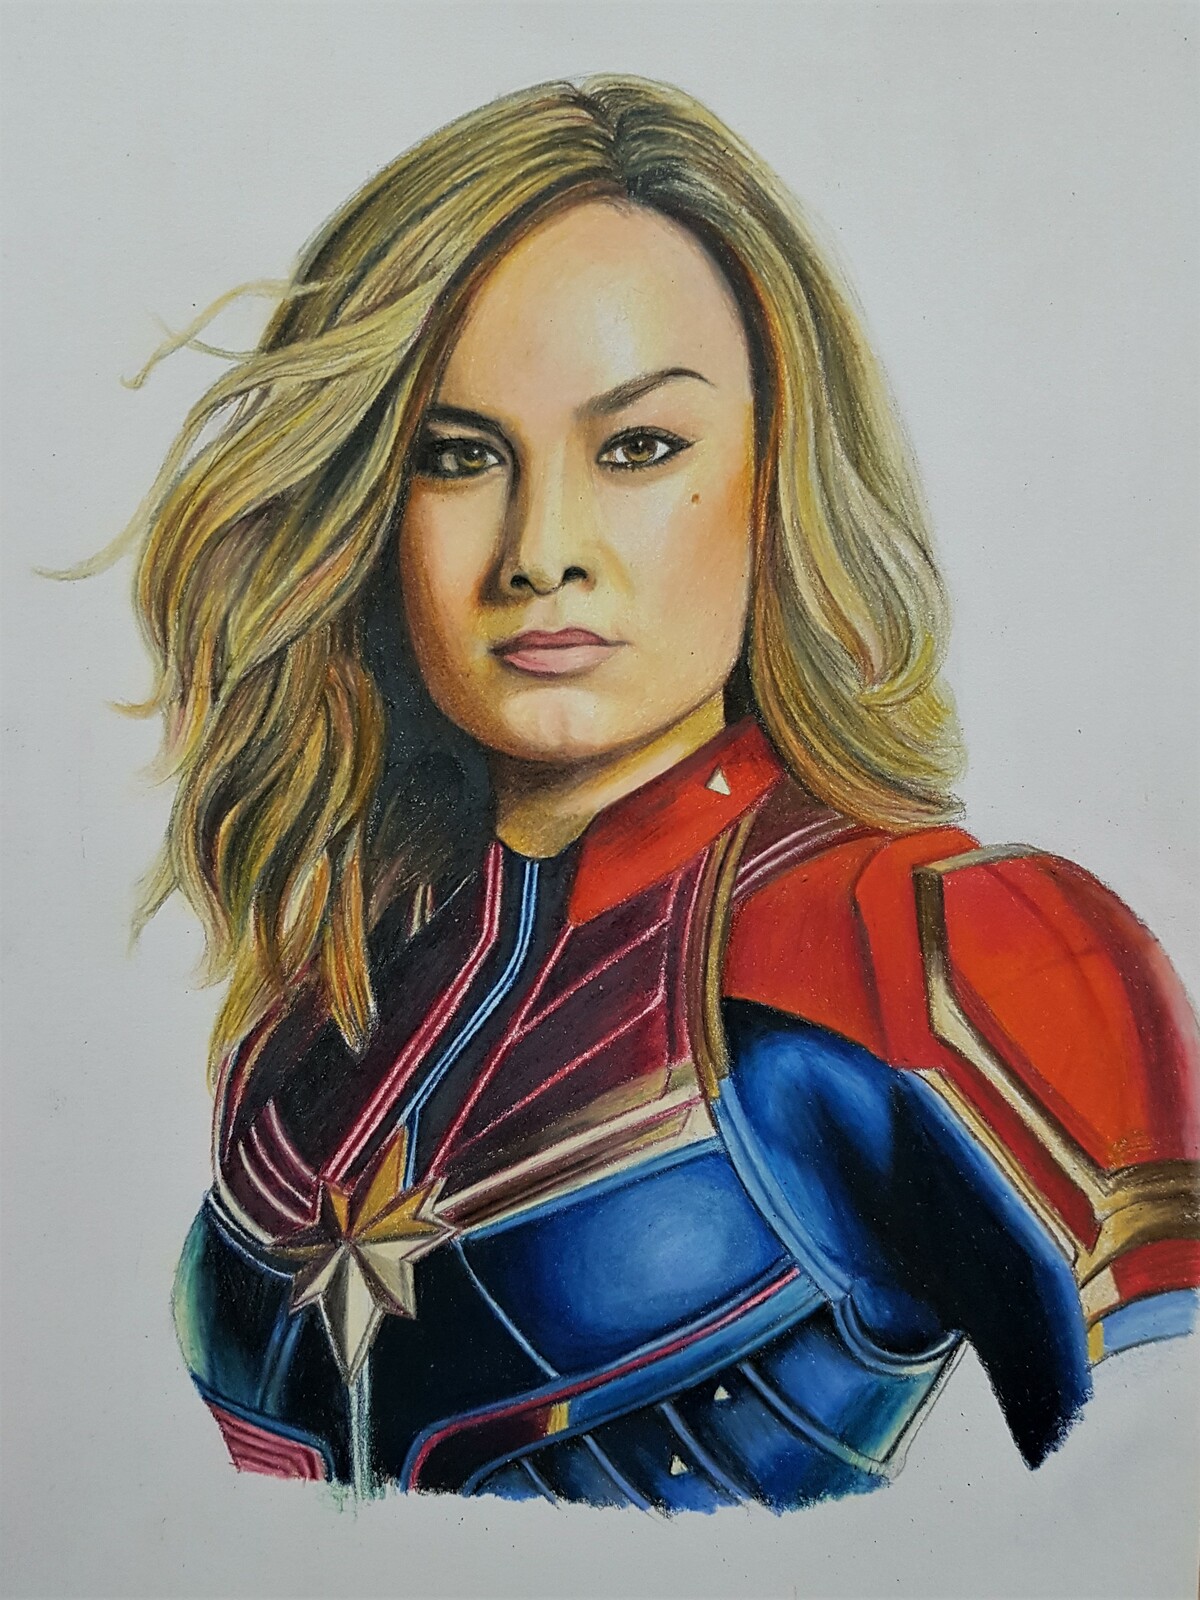 Semi-realism sketch of Captain Marvel played by Brie Larson based on Marvel Avengers' Captain Marvel movie (2019)
Medium: Prismacolor pencils on HVS paper. 